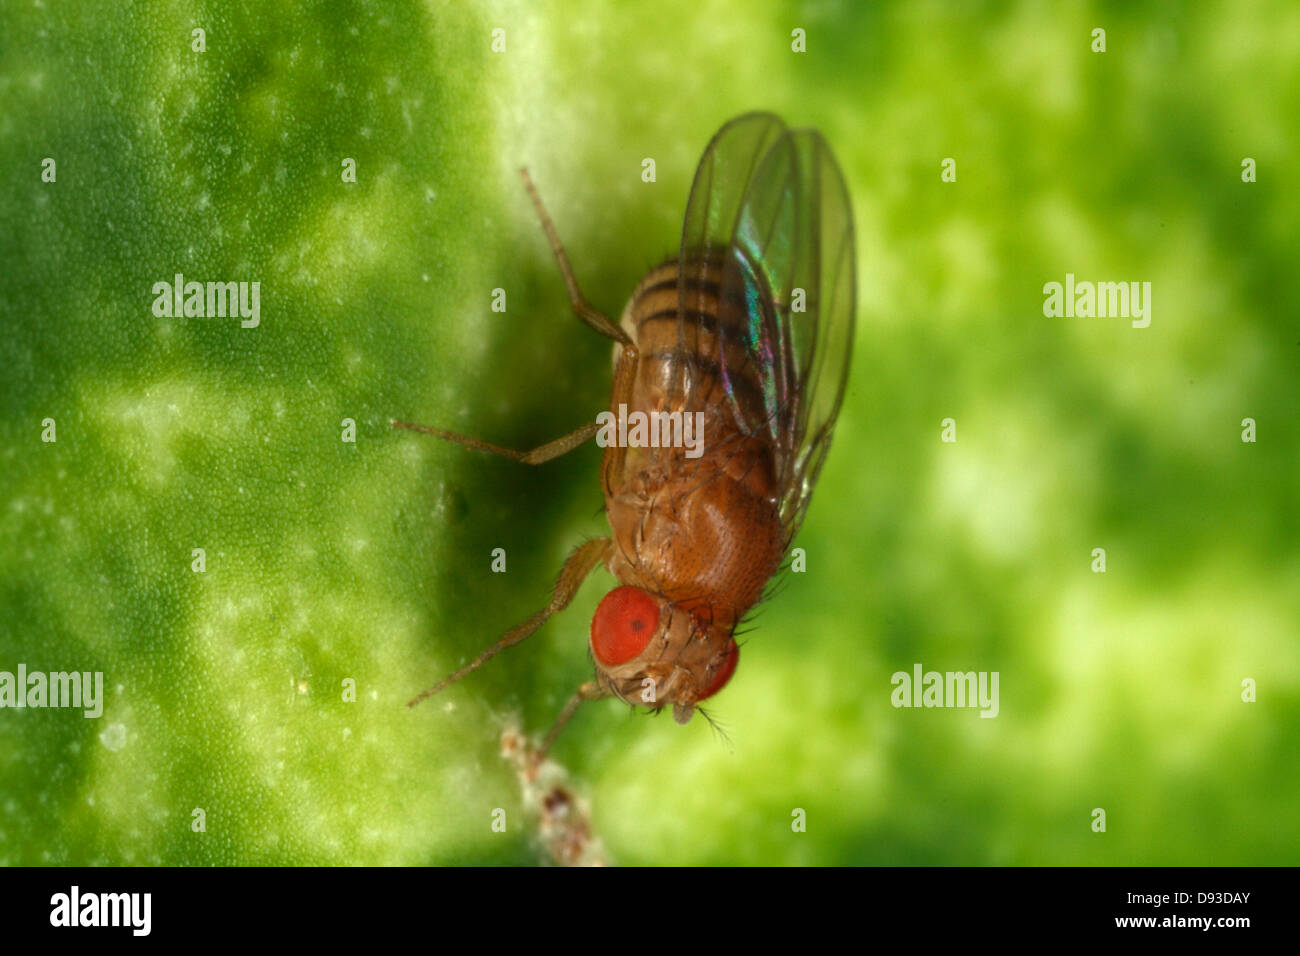 Drosophila melanogaster on a watermelon, close-up, Sweden. Stock Photo